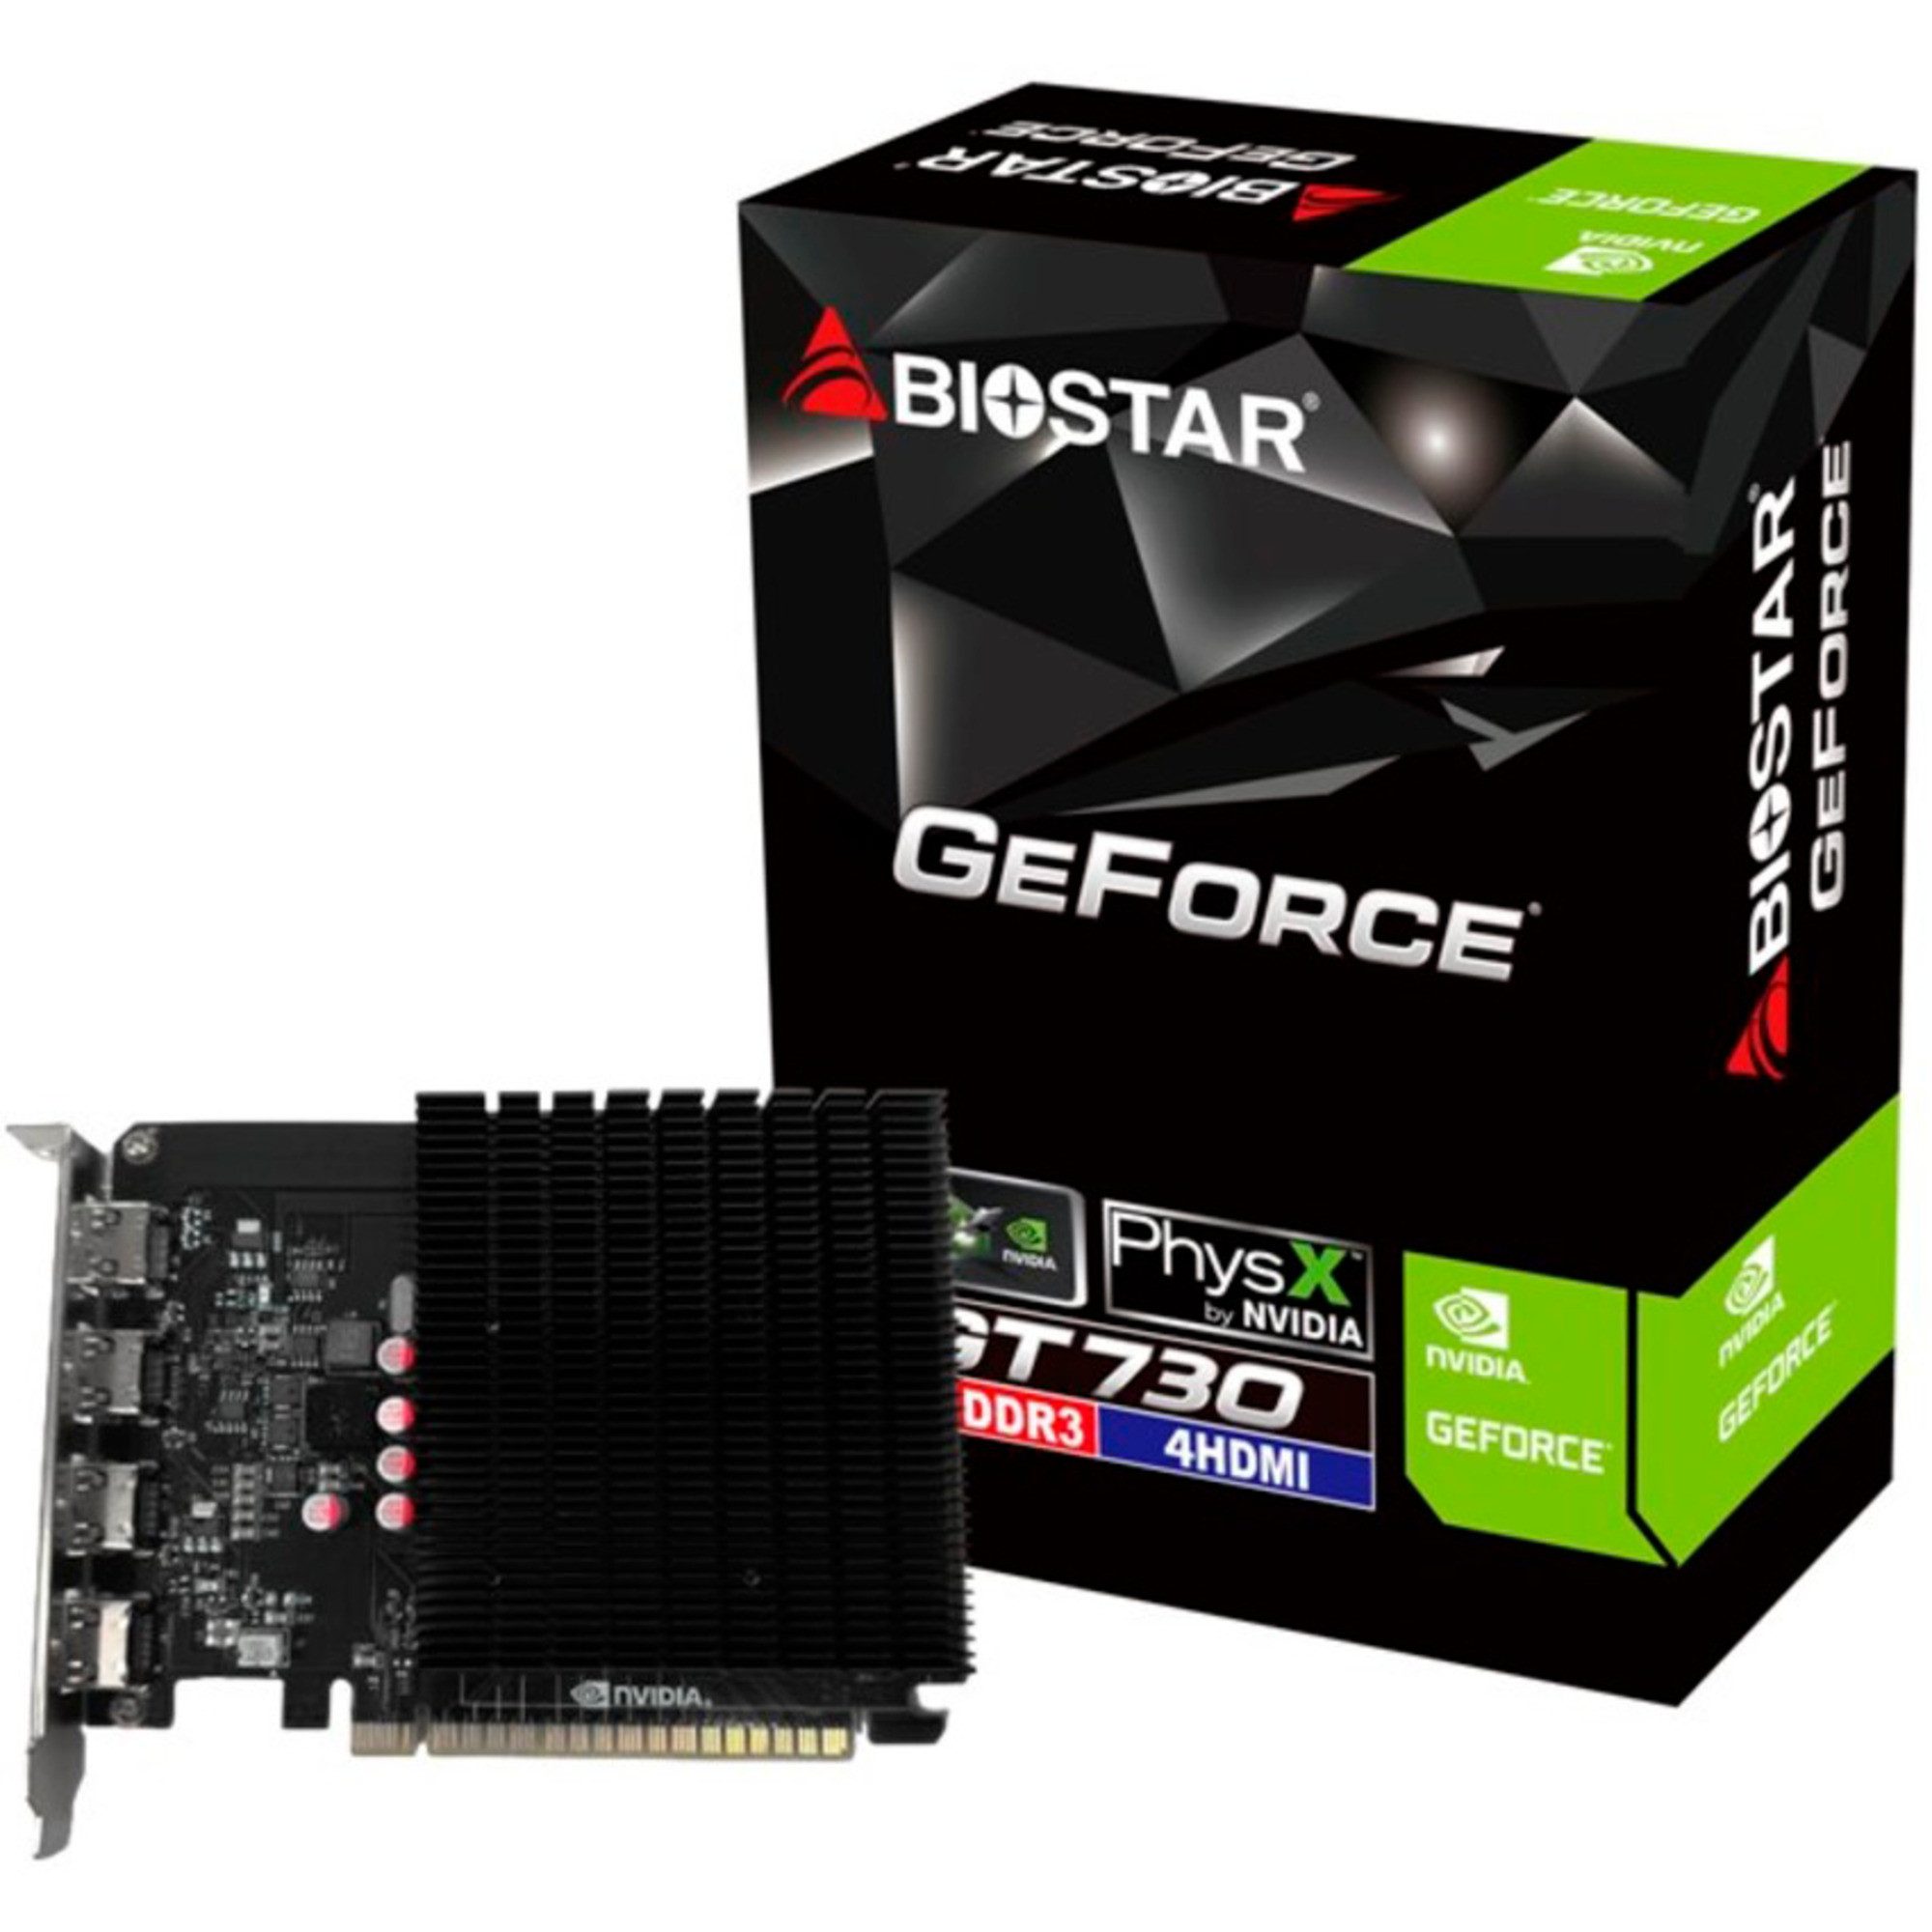 Biostar GeForce GT 730 Grafikkarte (4 GB)